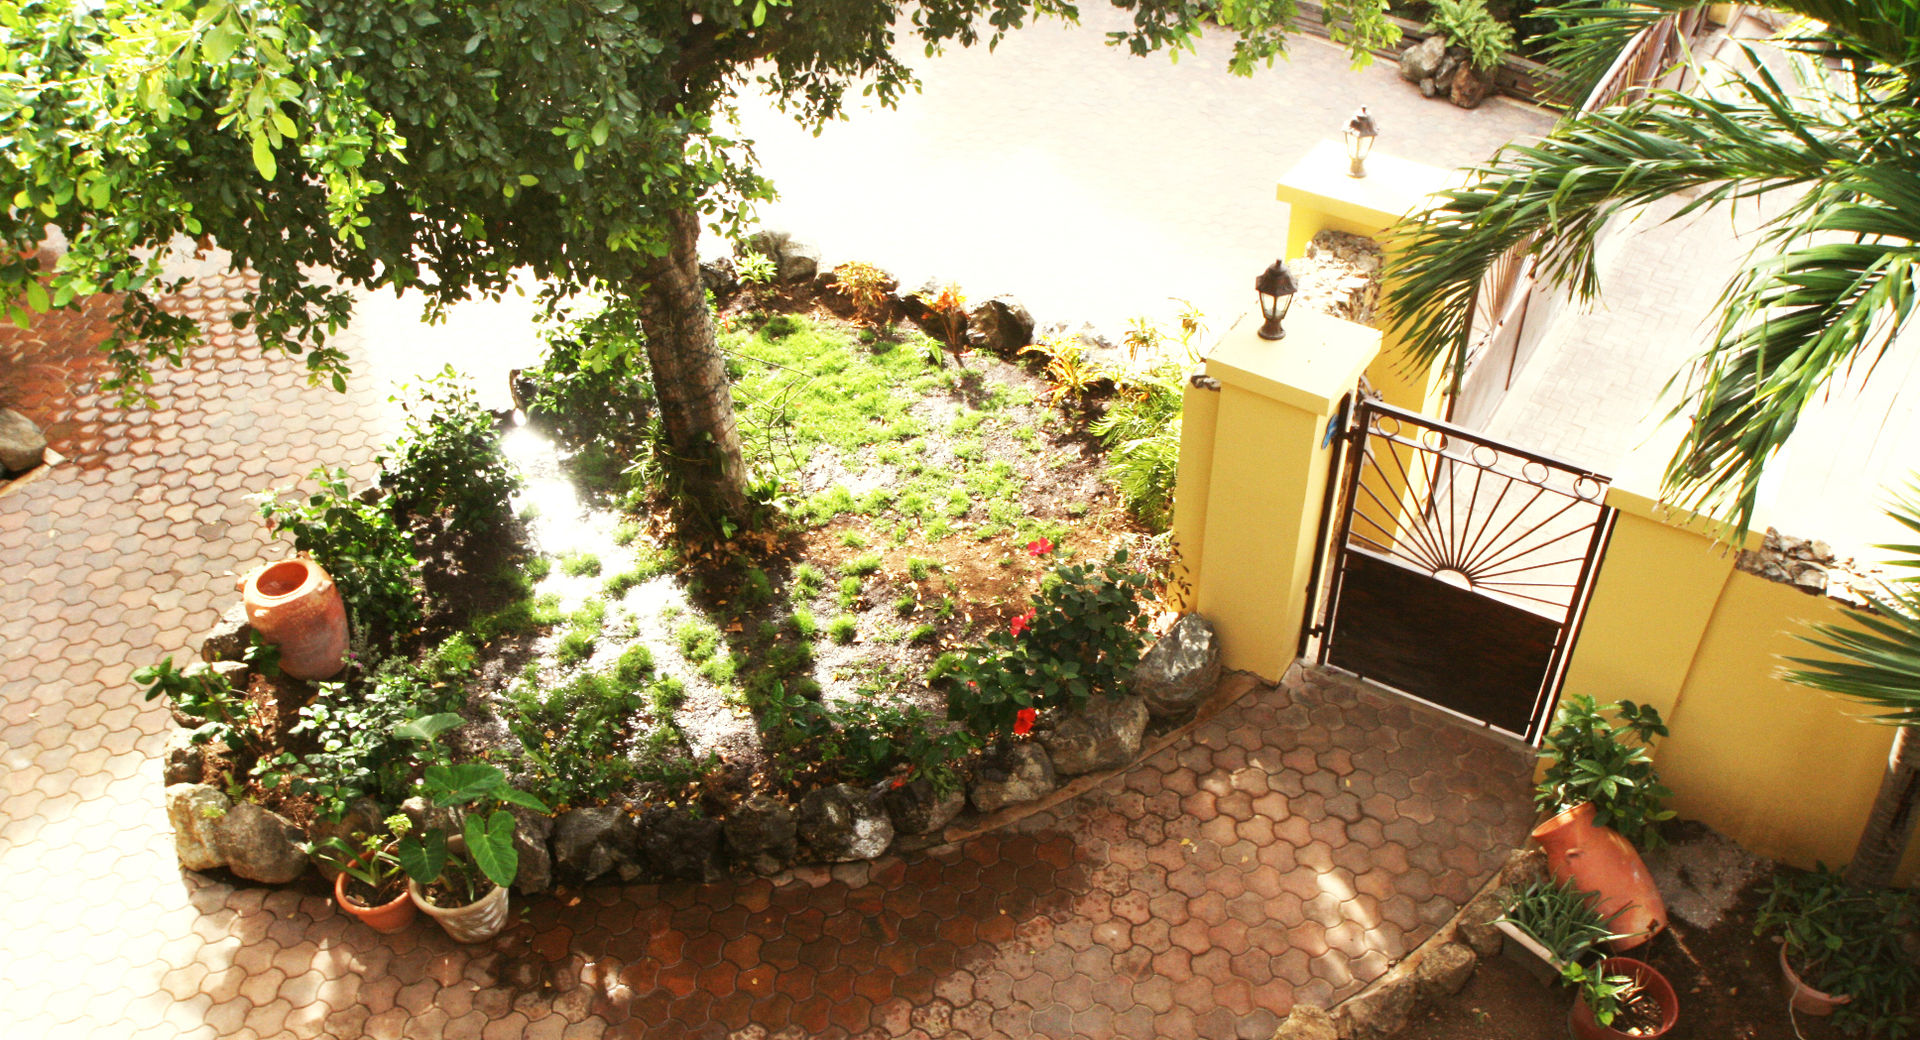 Casa Rokx, Willemstad Curaçao, architectenbureau Aerlant Cloin BNA architectenbureau Aerlant Cloin BNA Jardines de estilo tropical